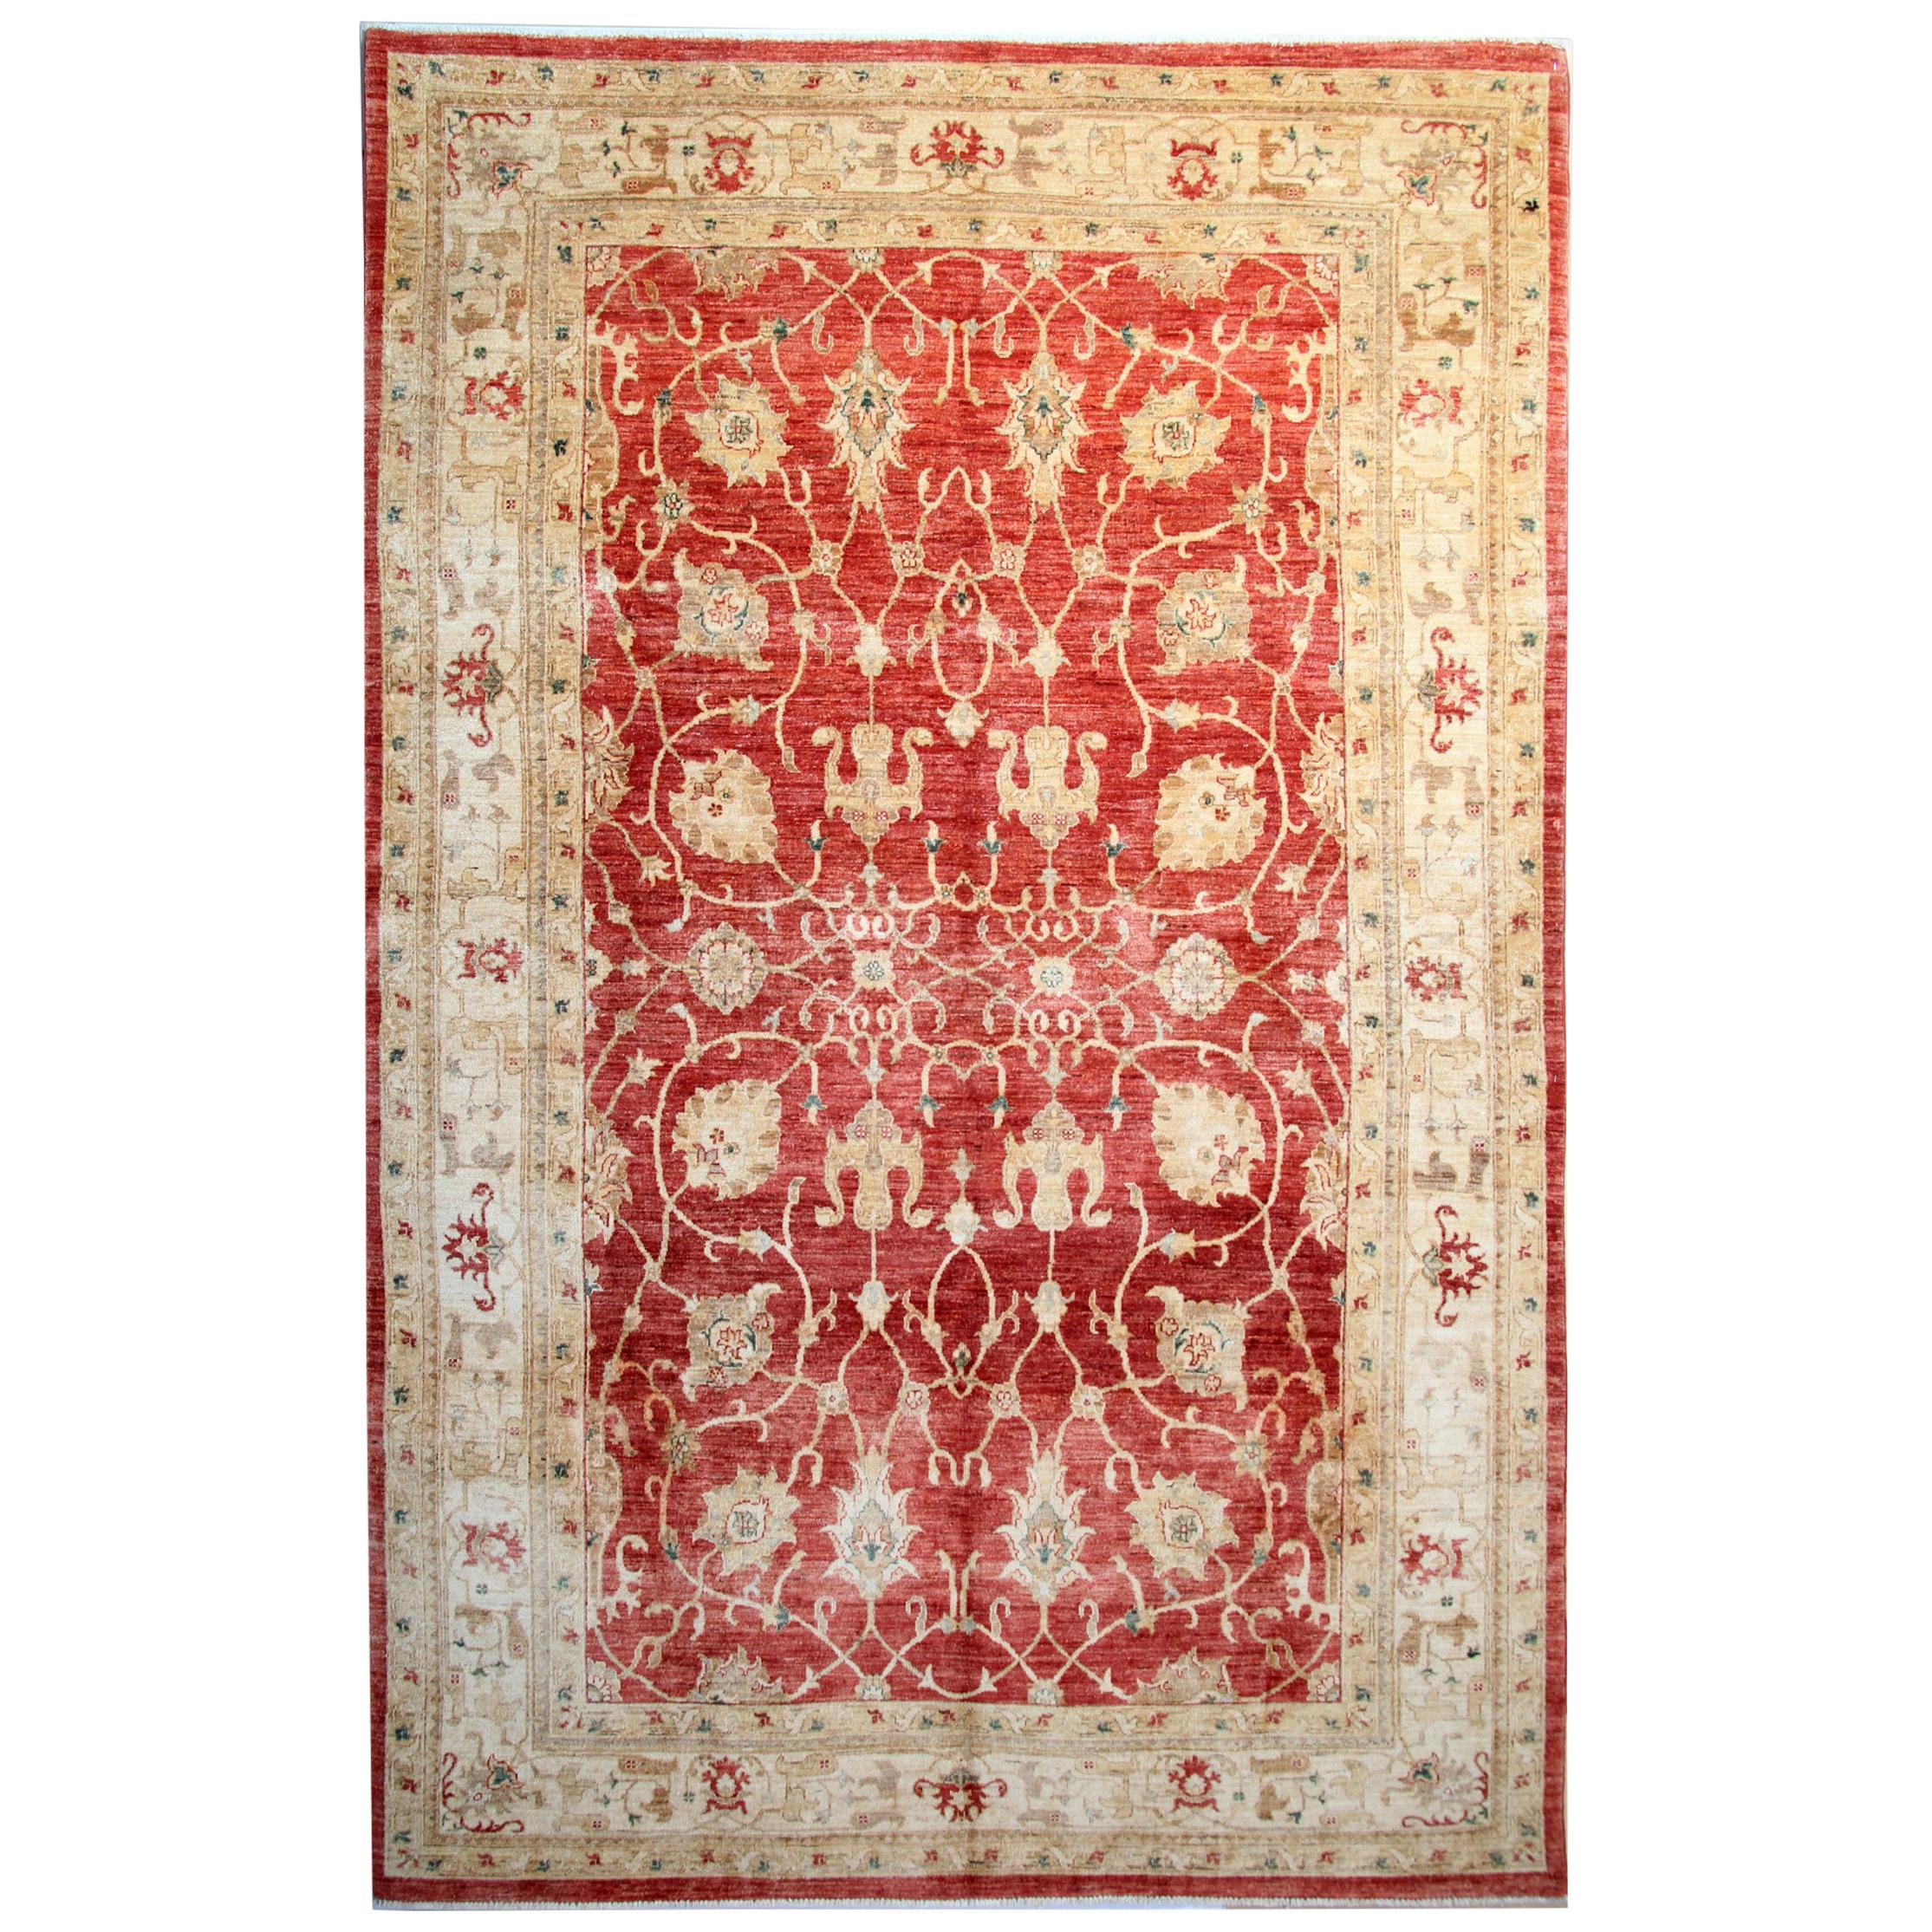 Handmade Oriental Carpet, Traditional Area Rug For Sale